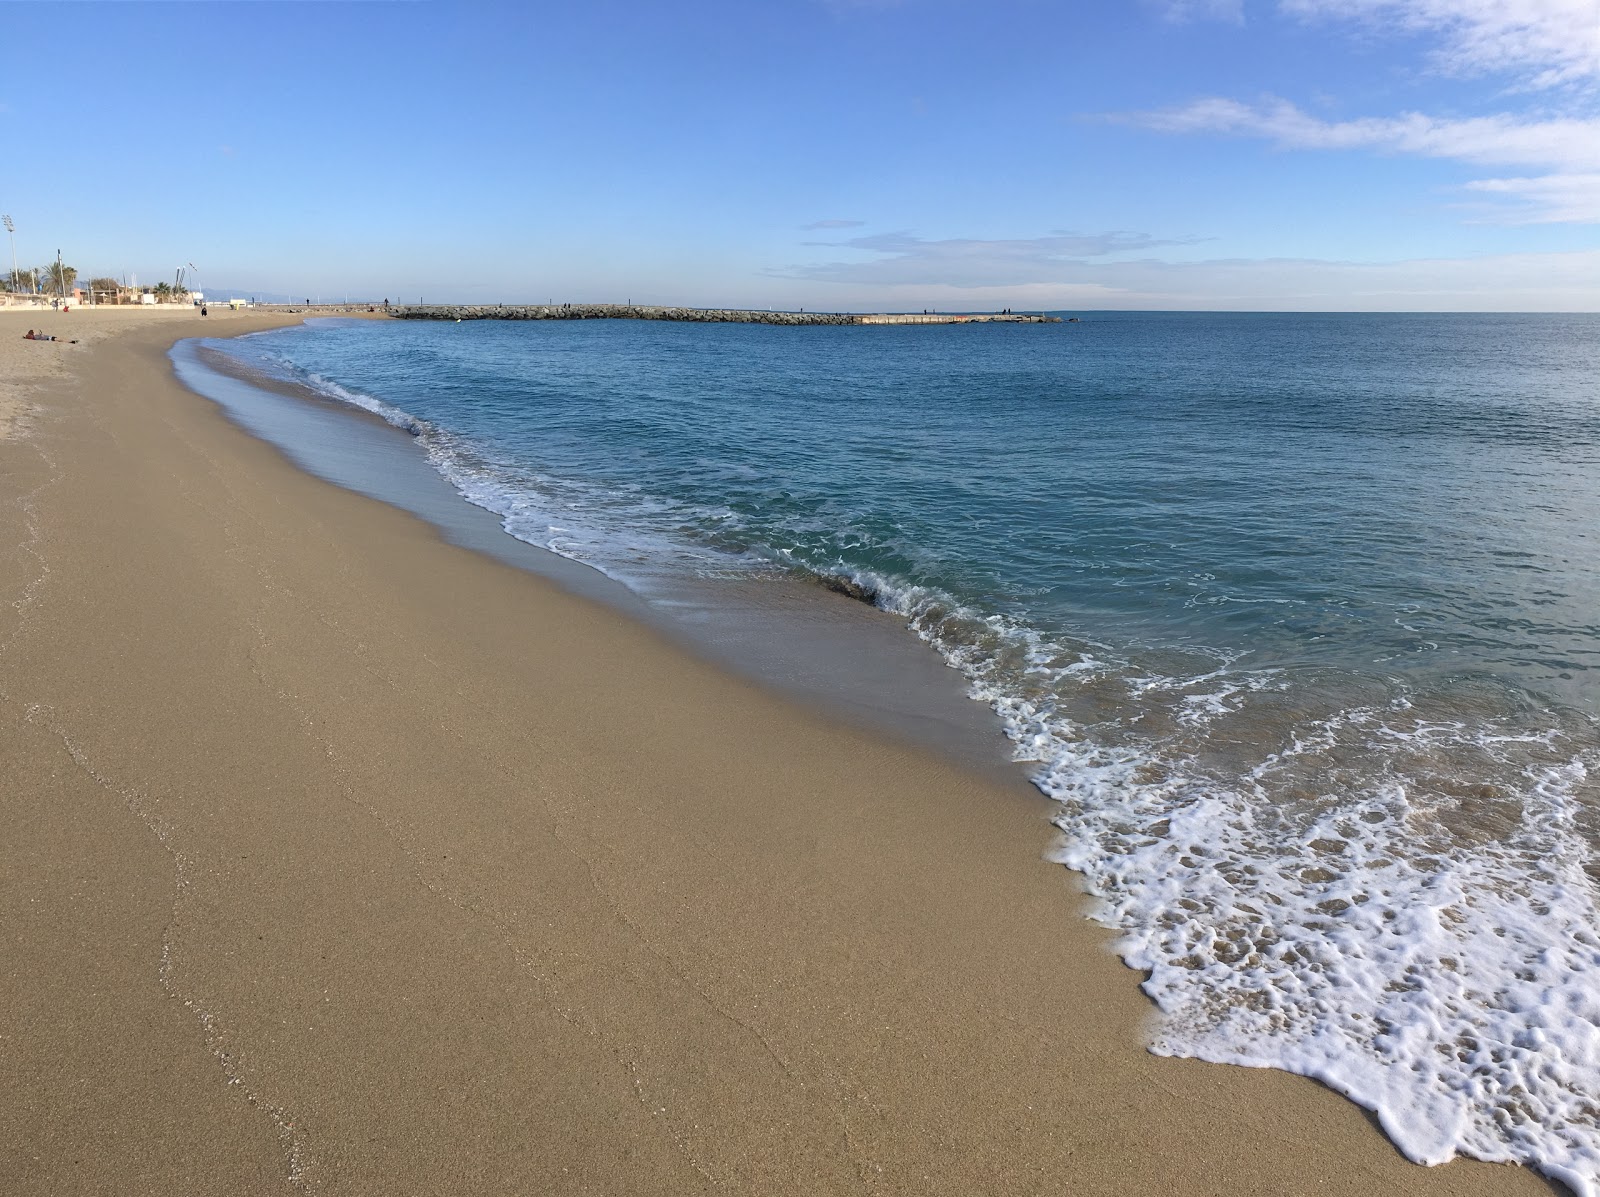 Foto de Playa de Bogatell con brillante arena fina superficie